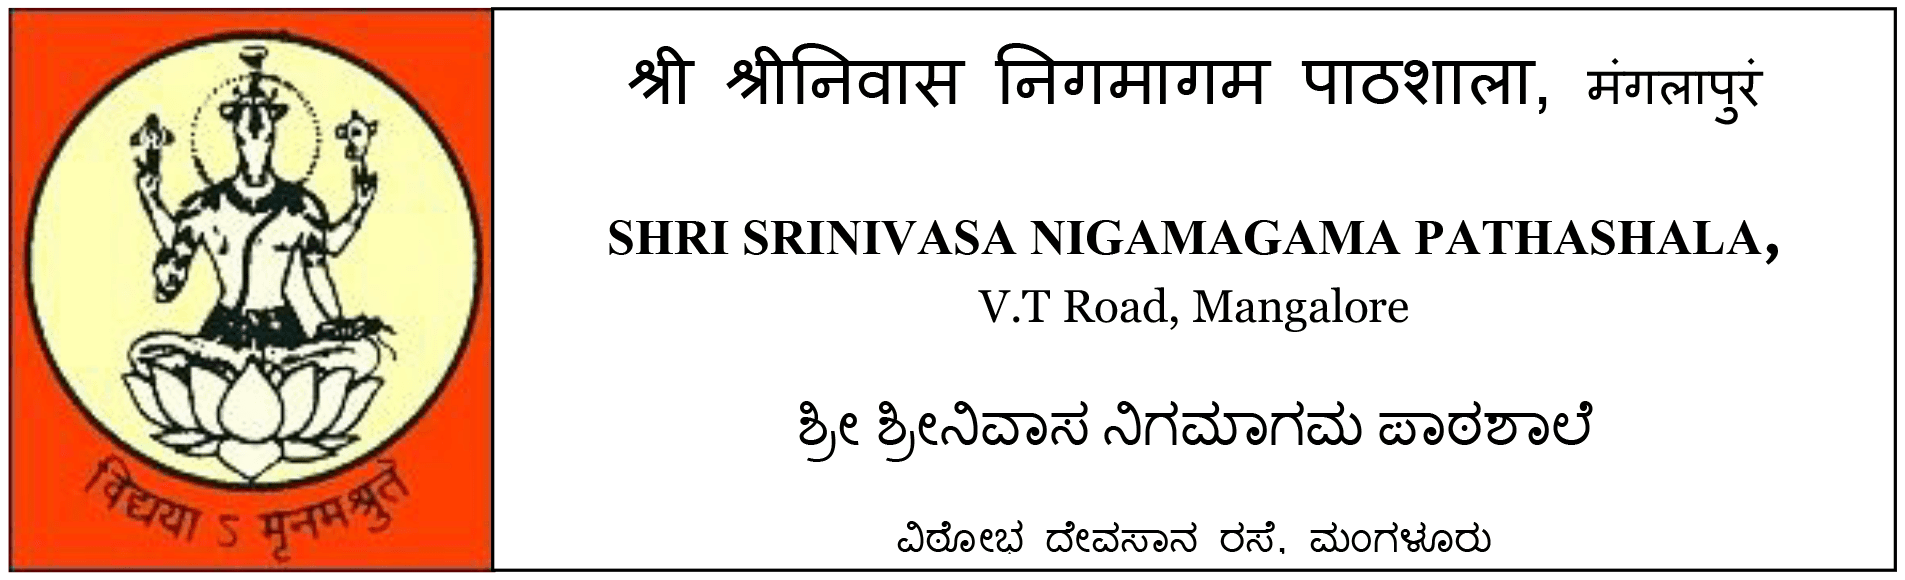 Shri Srinivasa Nigamagama Pathashala